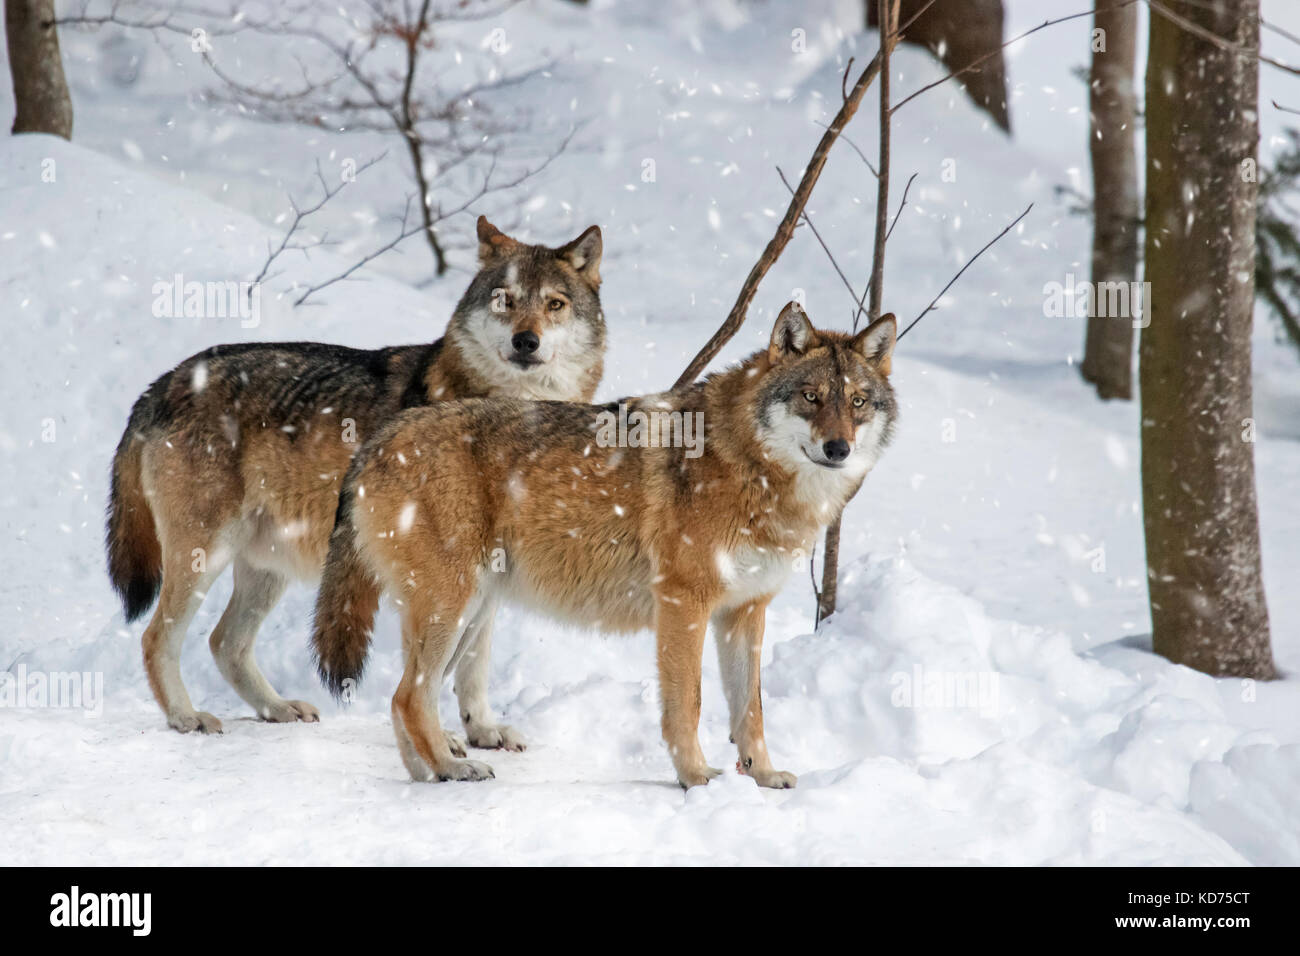 Zwei graue Wölfe / graue Wölfe (Canis lupus) im Schnee bei Schneefall in Wald im Winter Stockfoto